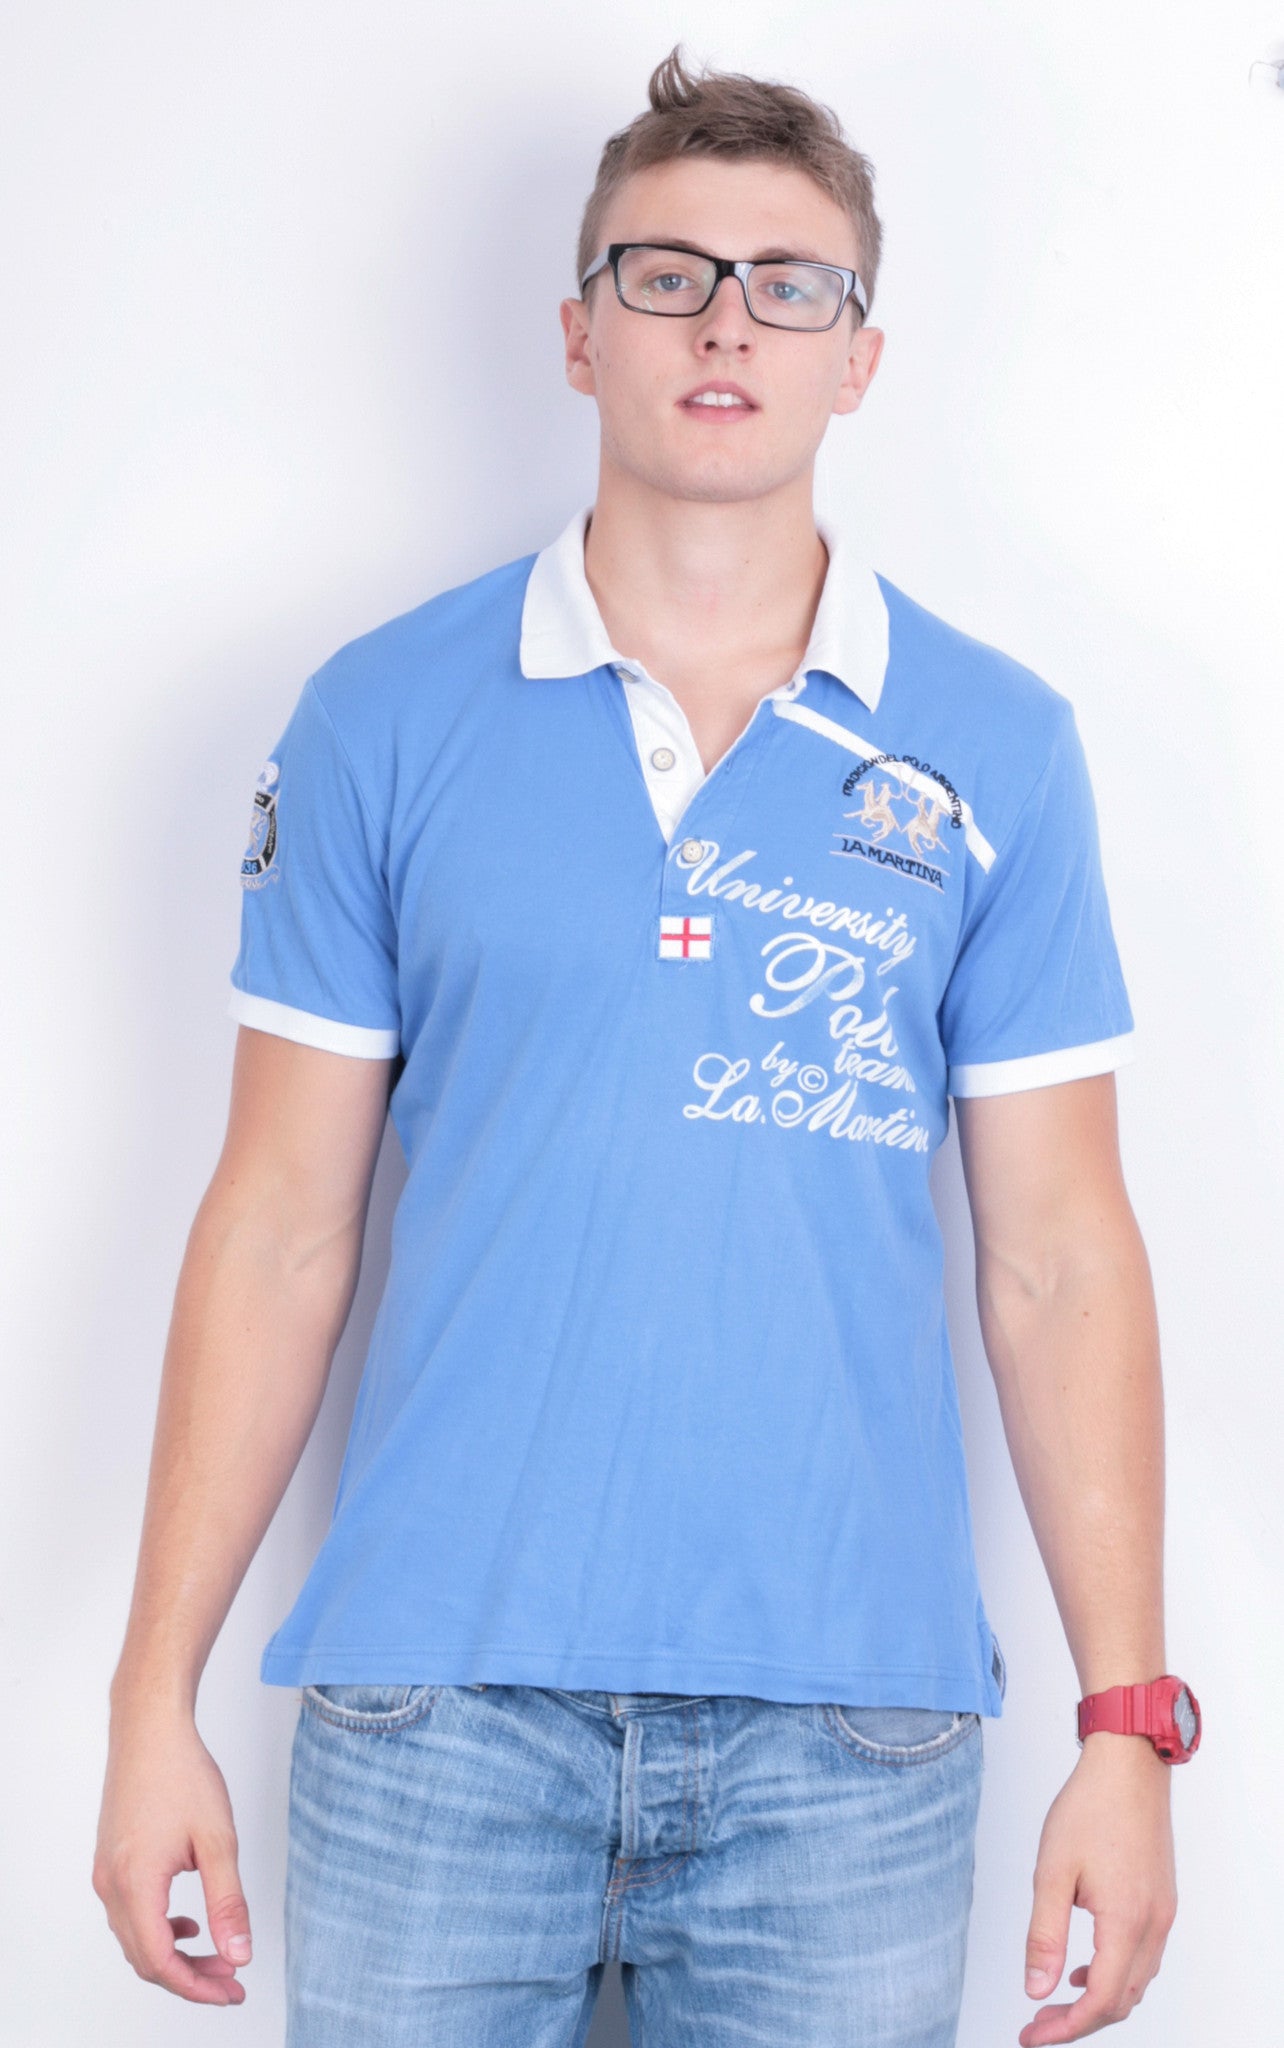 La Martina Mens XL Polo Shirt Blue Short Sleeve Cotton Summer - RetrospectClothes